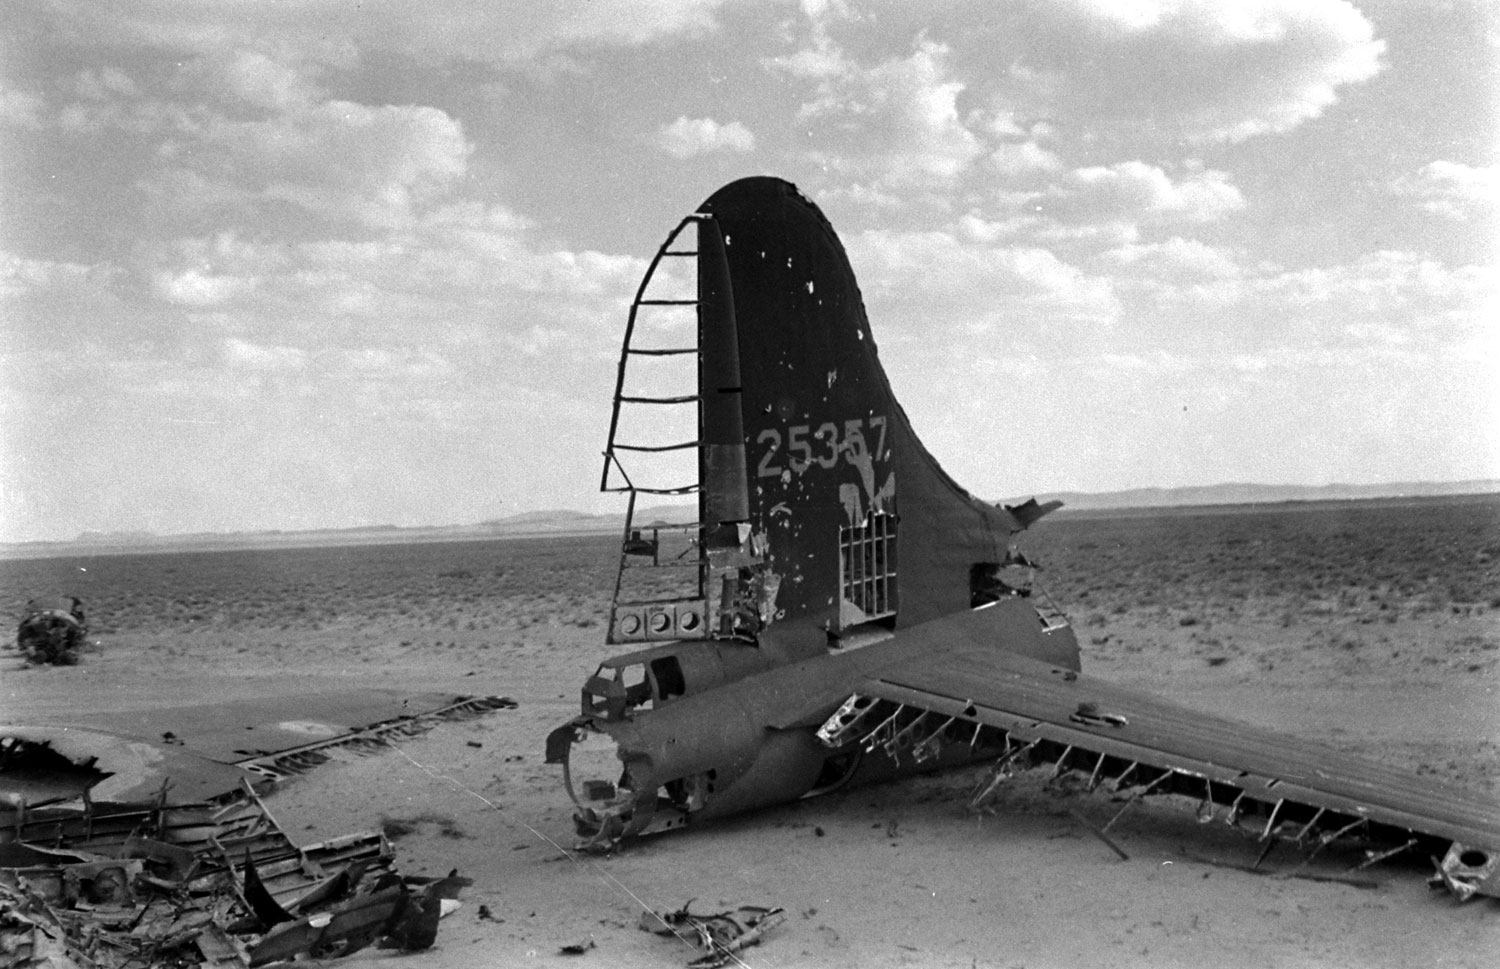 Airplane wreckage in the desert, Tunisia, 1943.